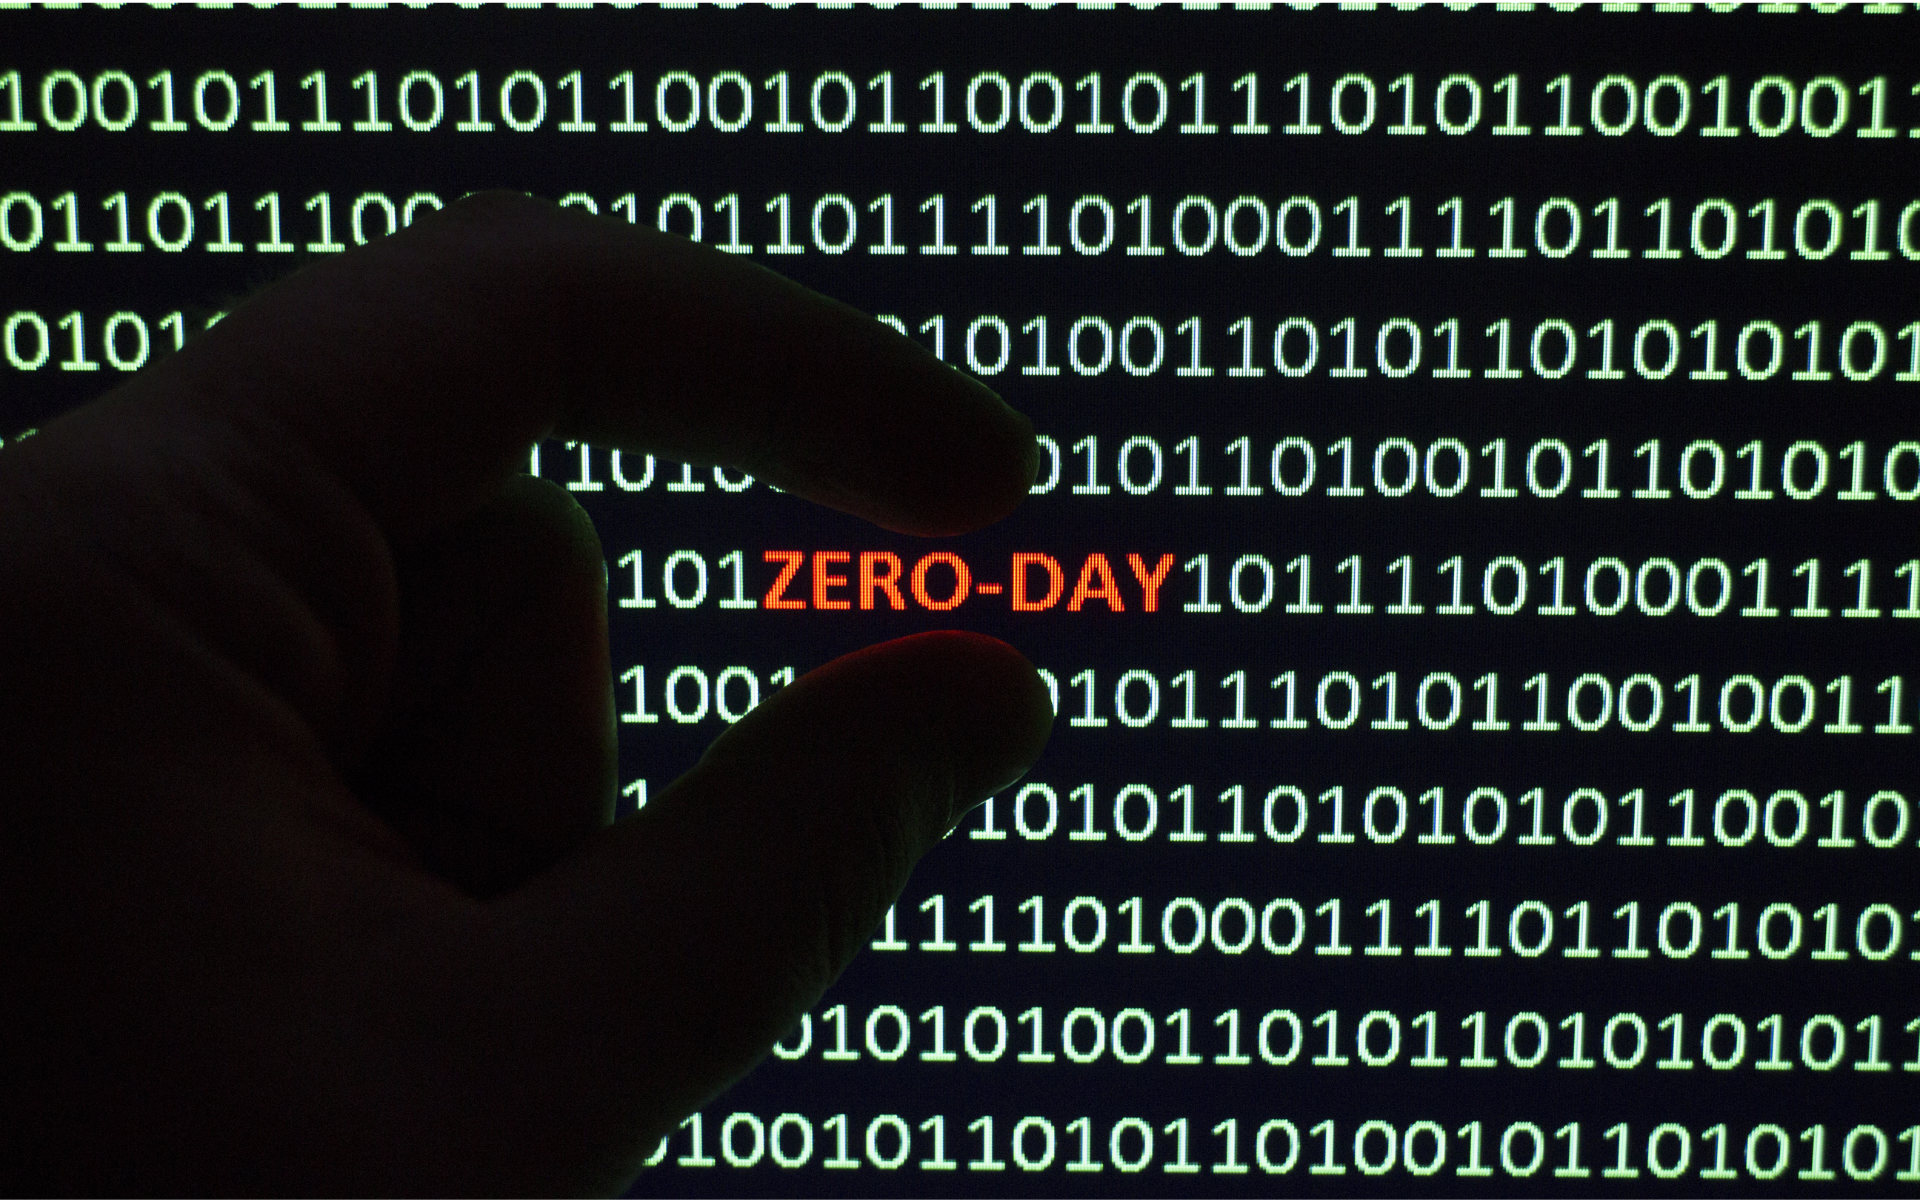 Vulnerabilidad Zero Day en Check Point VPN explotada activamente